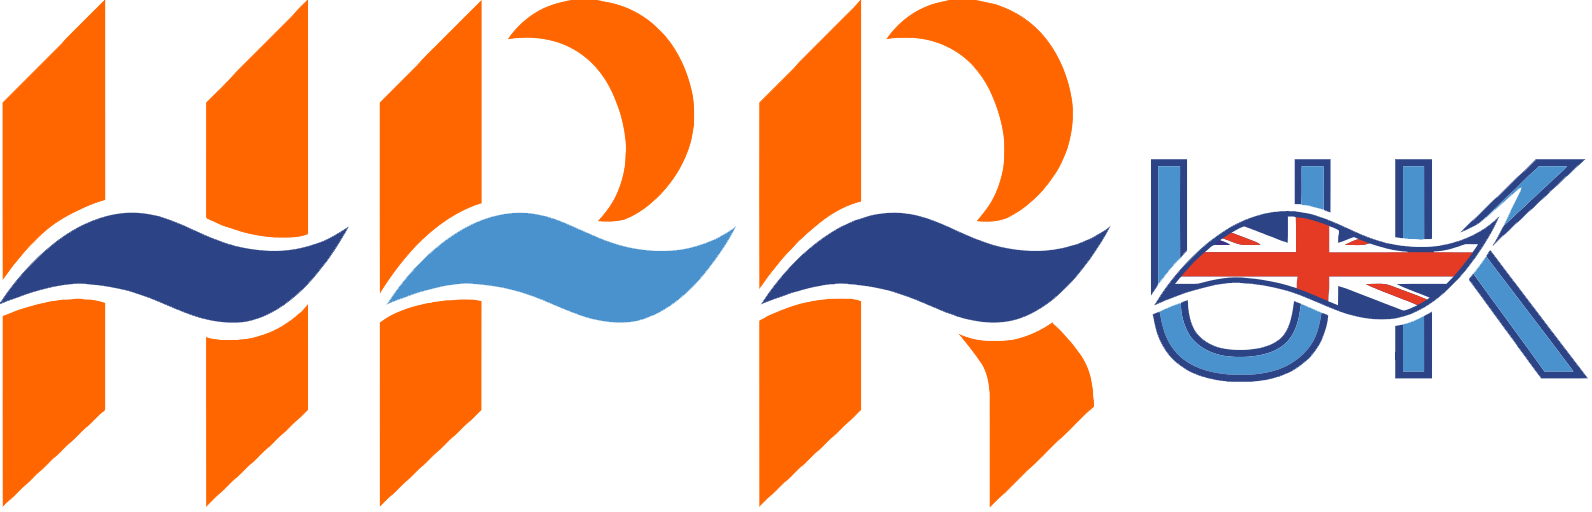 Hpr Uk Logo Rev 1 Horizontal Transparent - Graphic Design (1592x512)